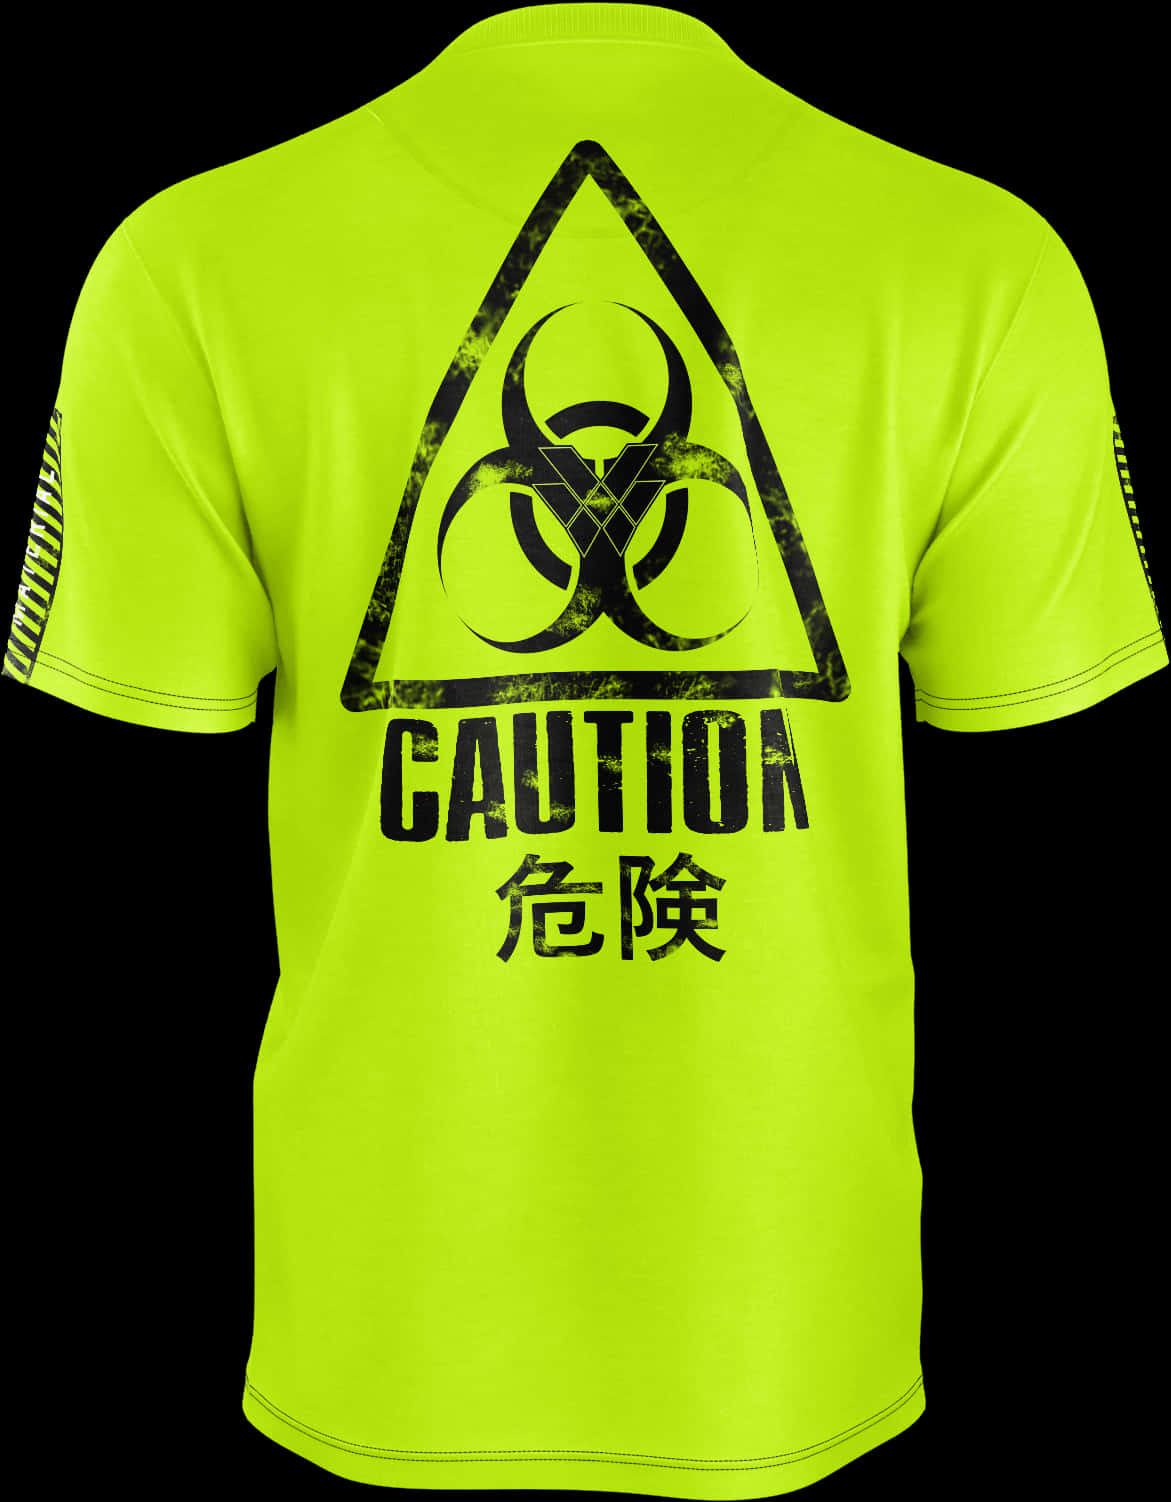 Biohazard Caution T Shirt Design PNG image